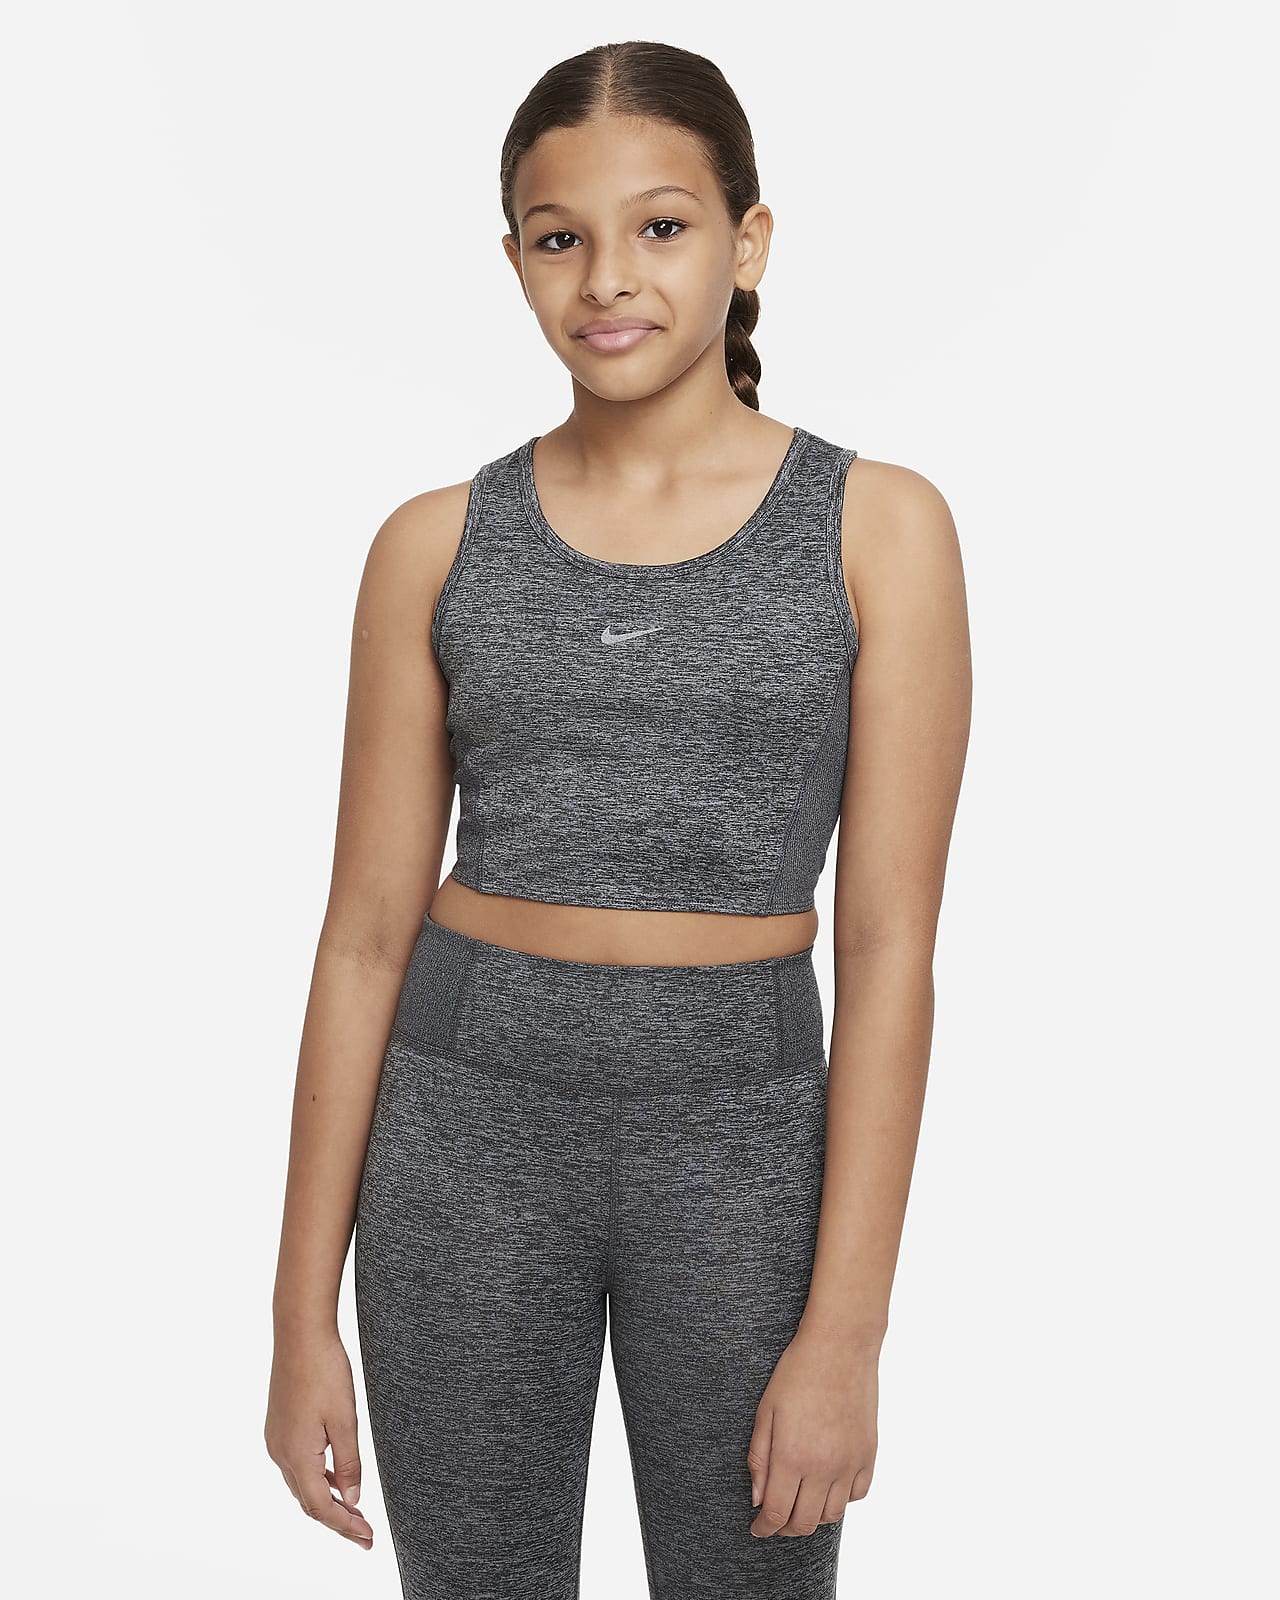 Nike Yoga Dri-FIT Tanktop für ältere Kinder (Mädchen)